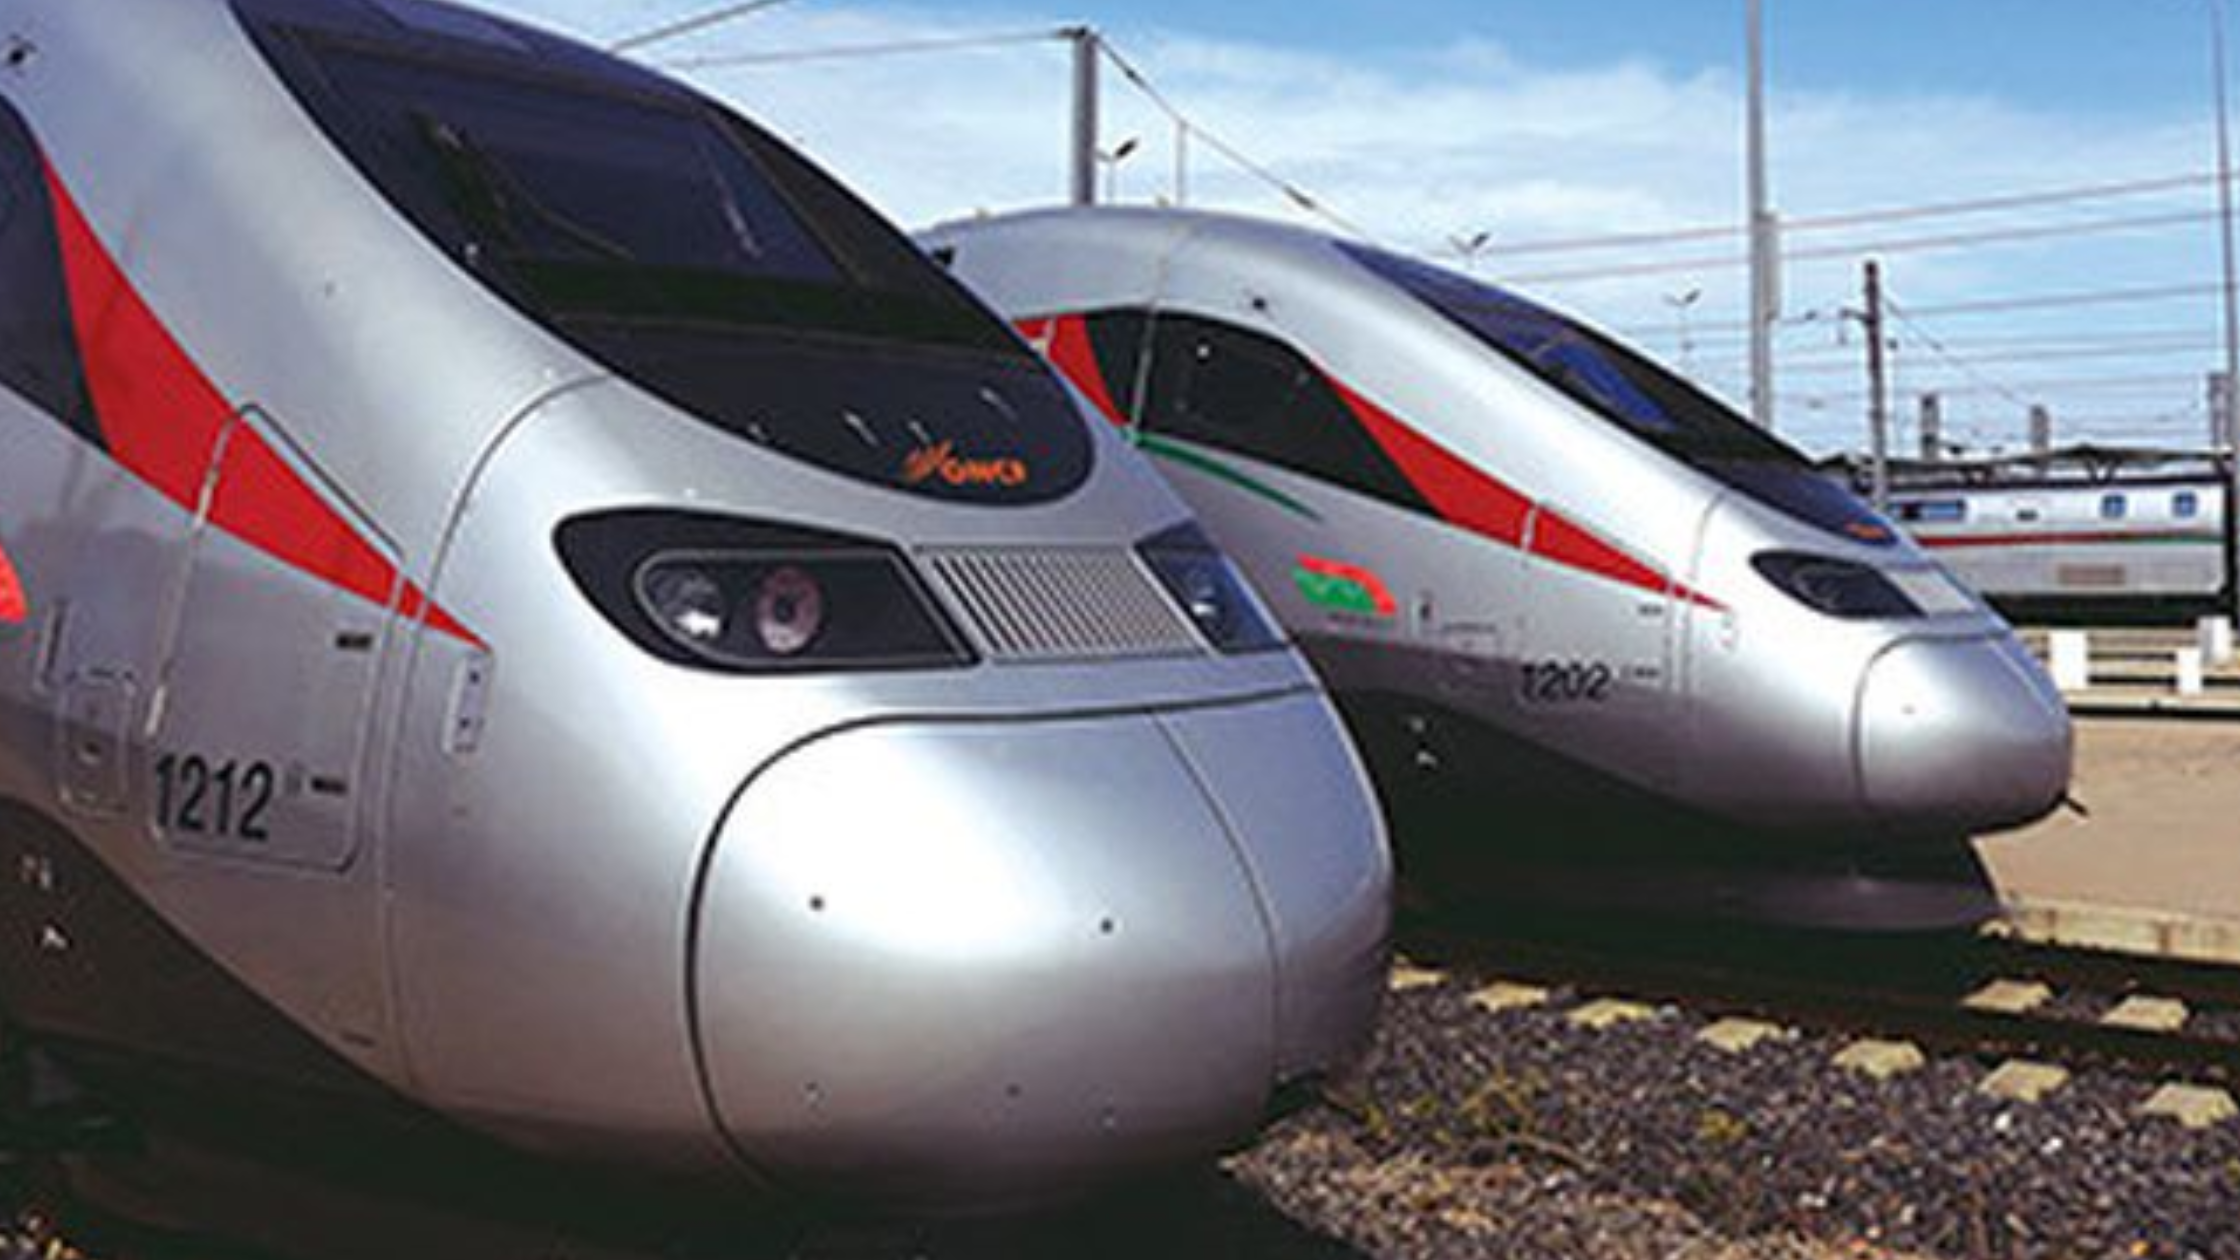 TGV Maroc horaires et tarifs 2022